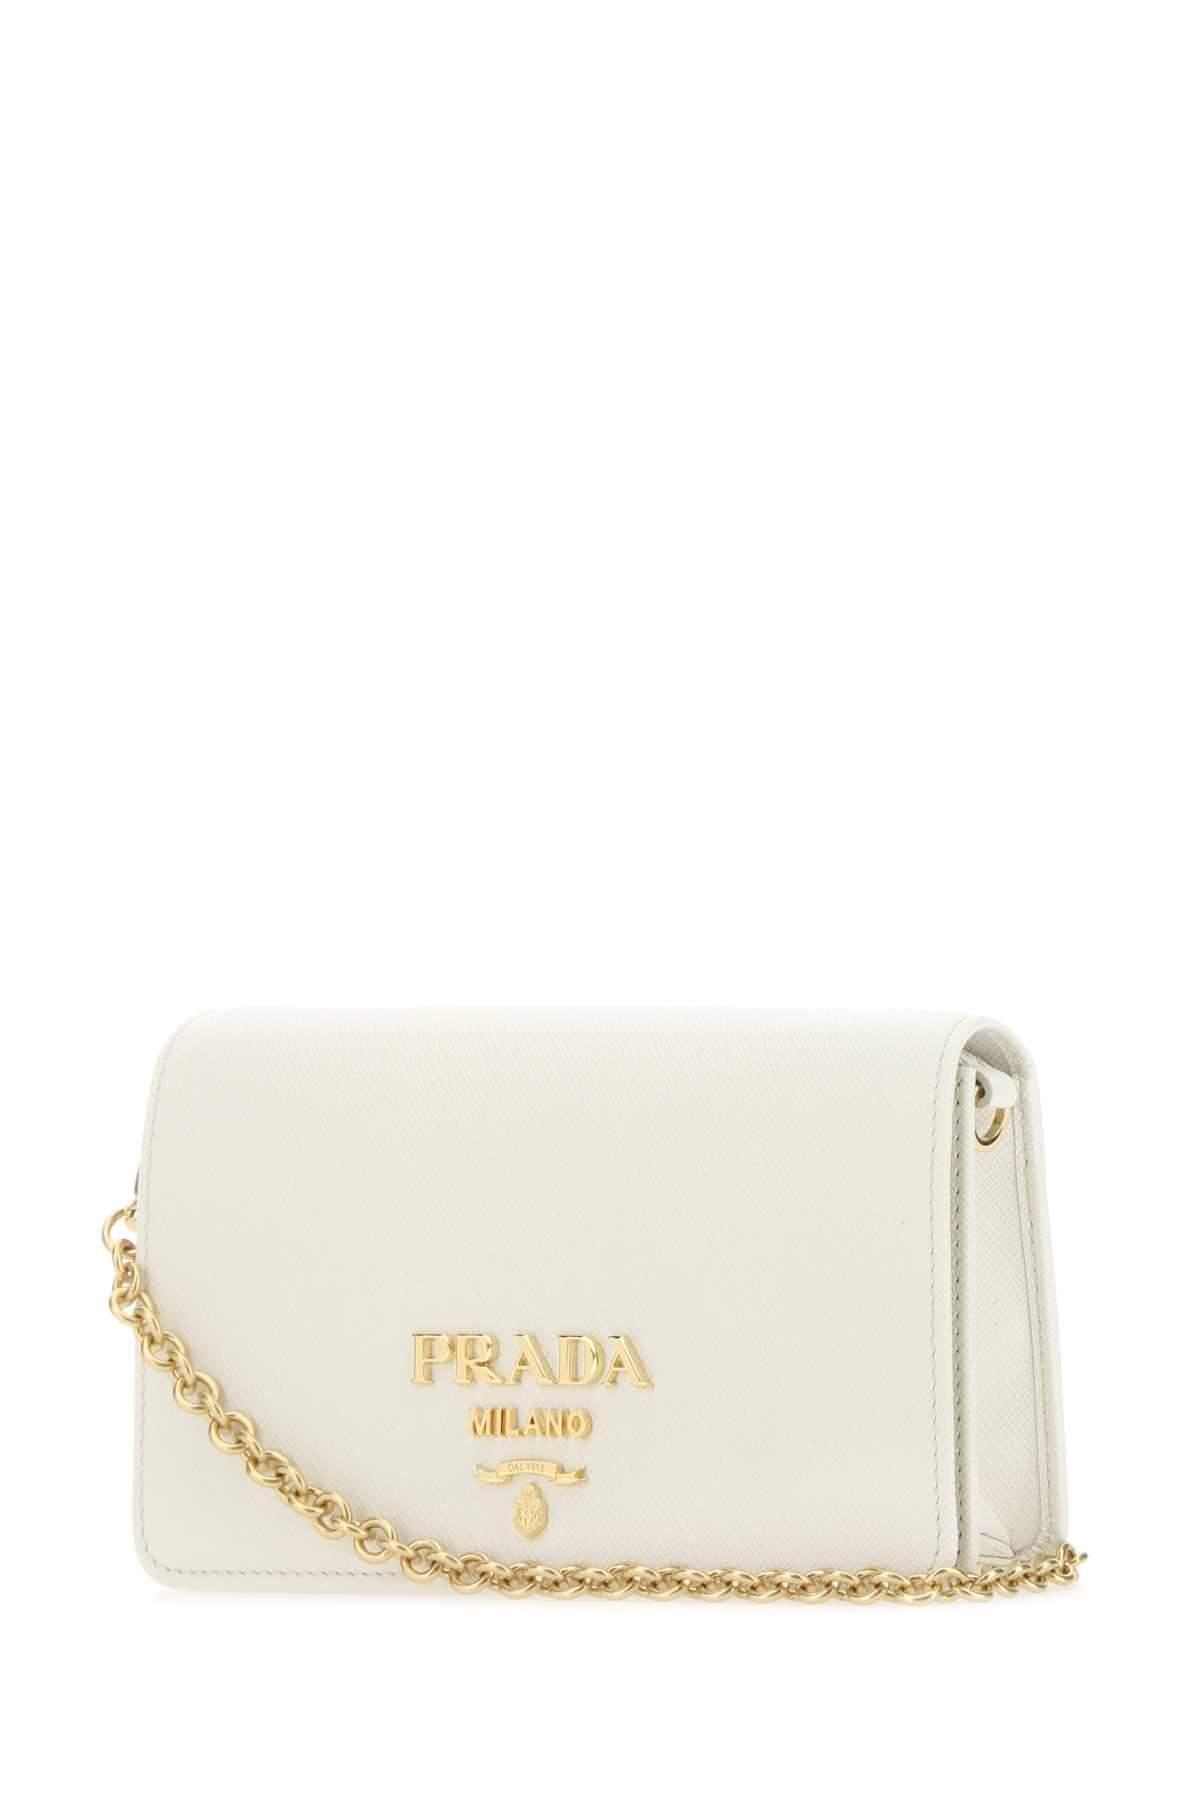 Prada Leather Logo Plaque Chain Clutch Bag in White | Lyst